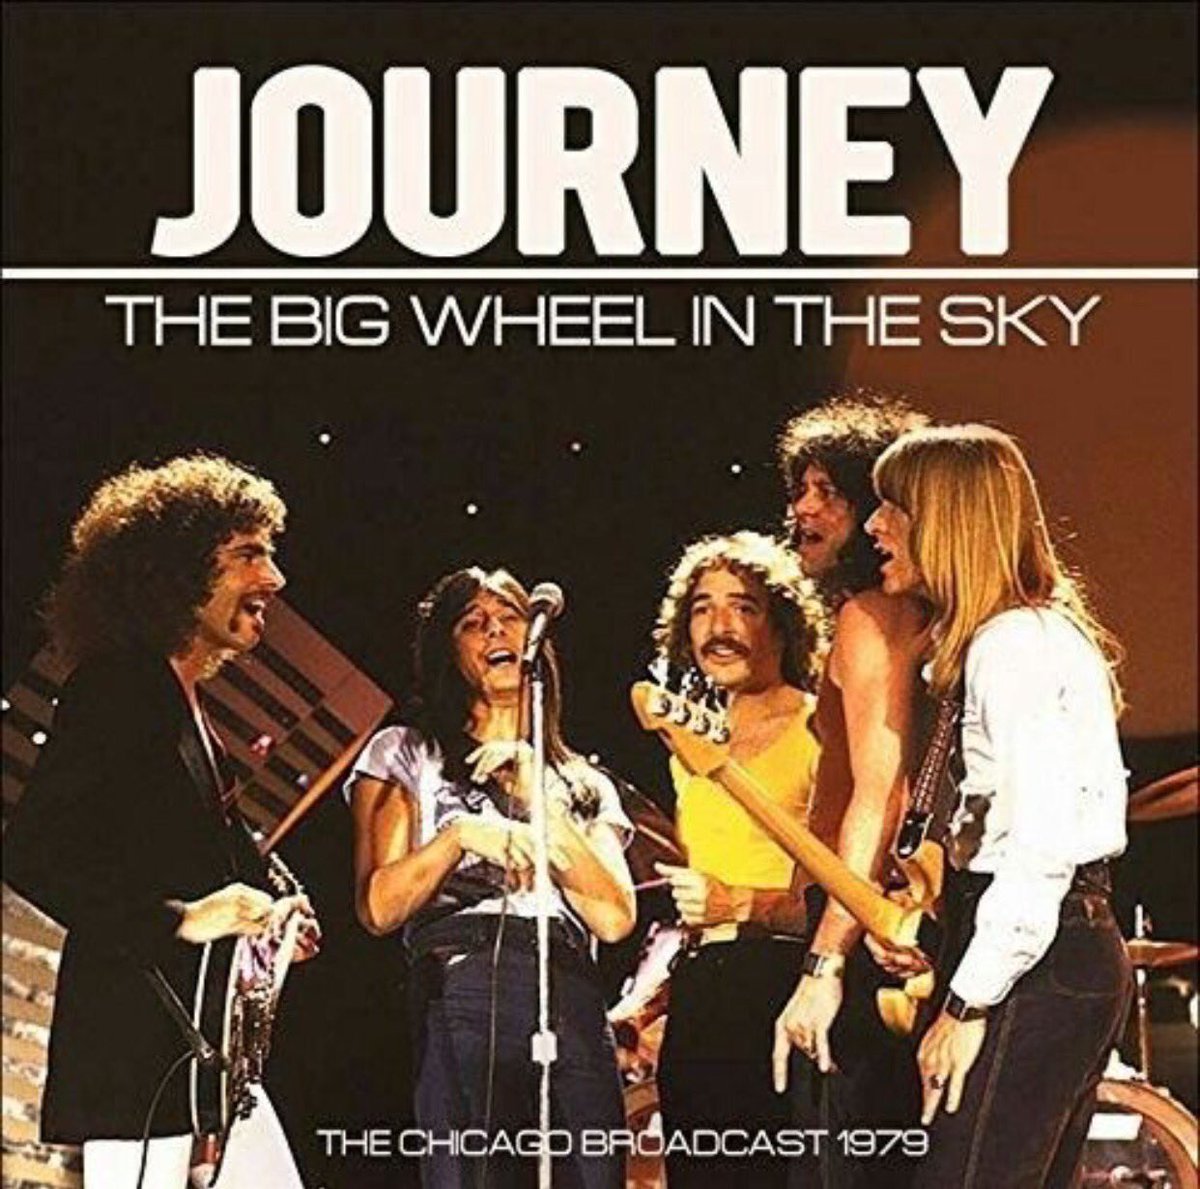 Sky journey. Journey Wheel in the Sky. Journey Journey 1975. Journey группа альбомы. Journey обложки альбомов.